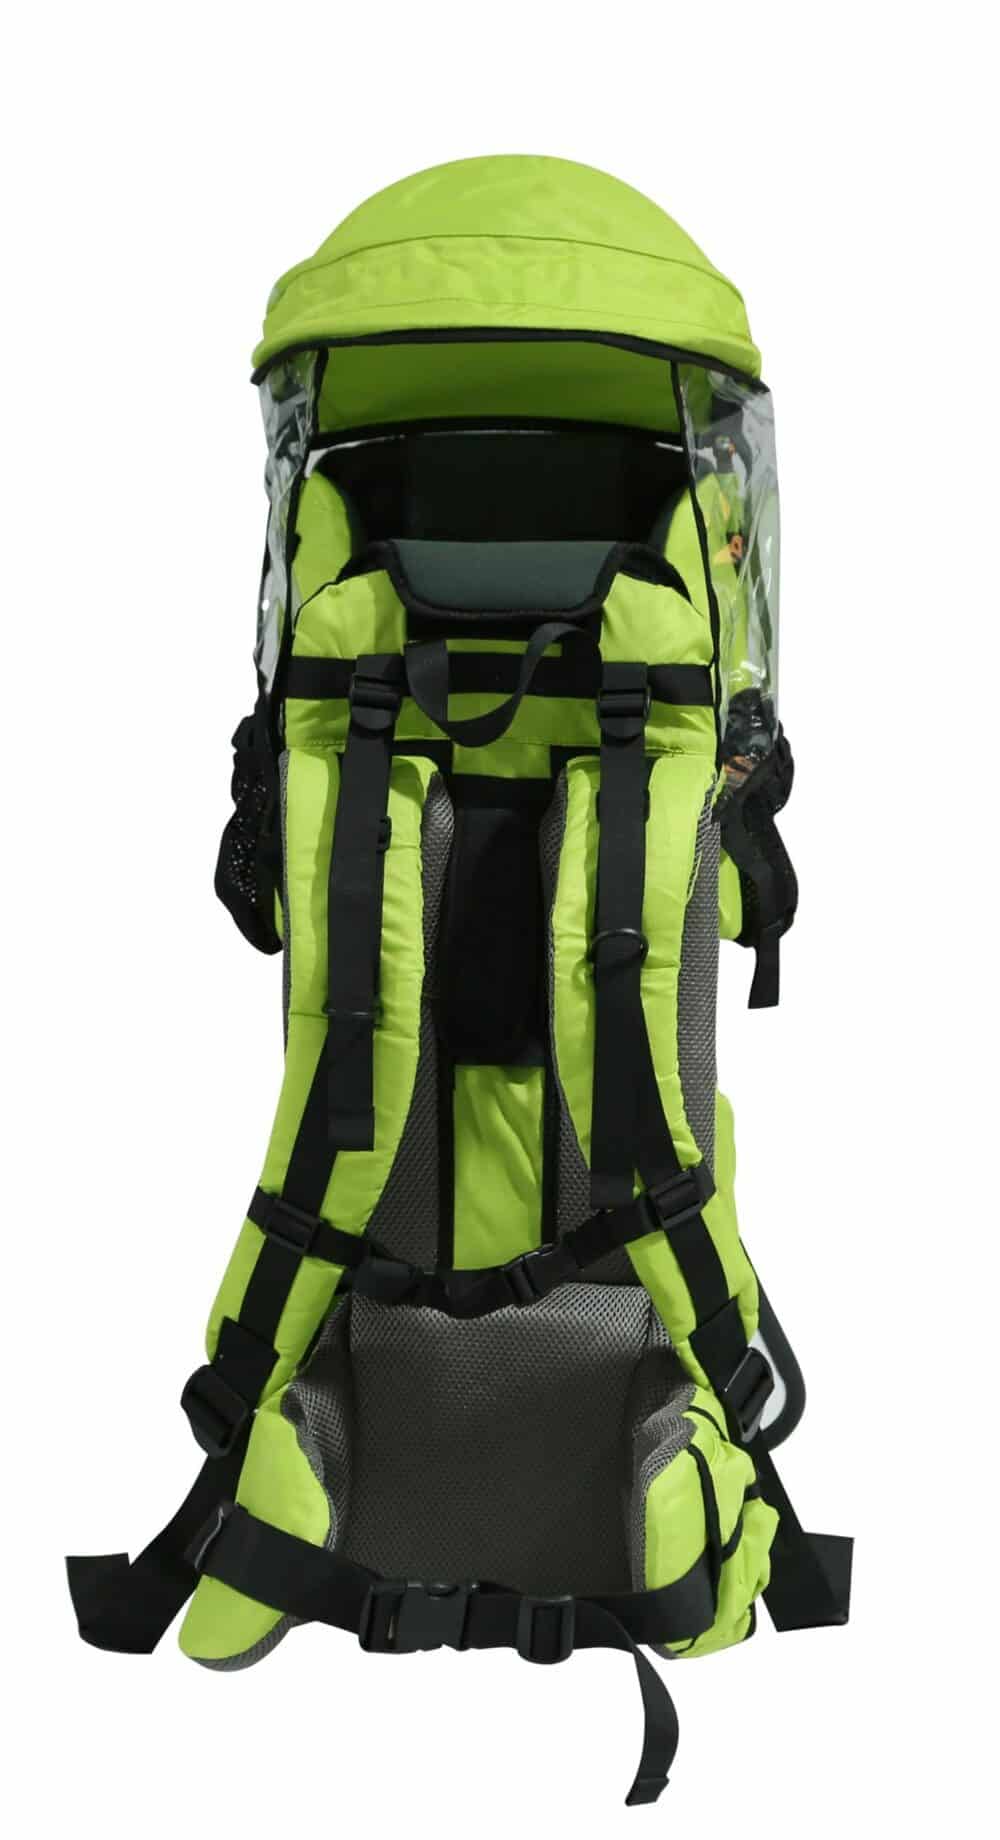 Porte-bébé pour randonnée sac à dos avec siège bébé Porte bébé randonnée Accessoire randonnée